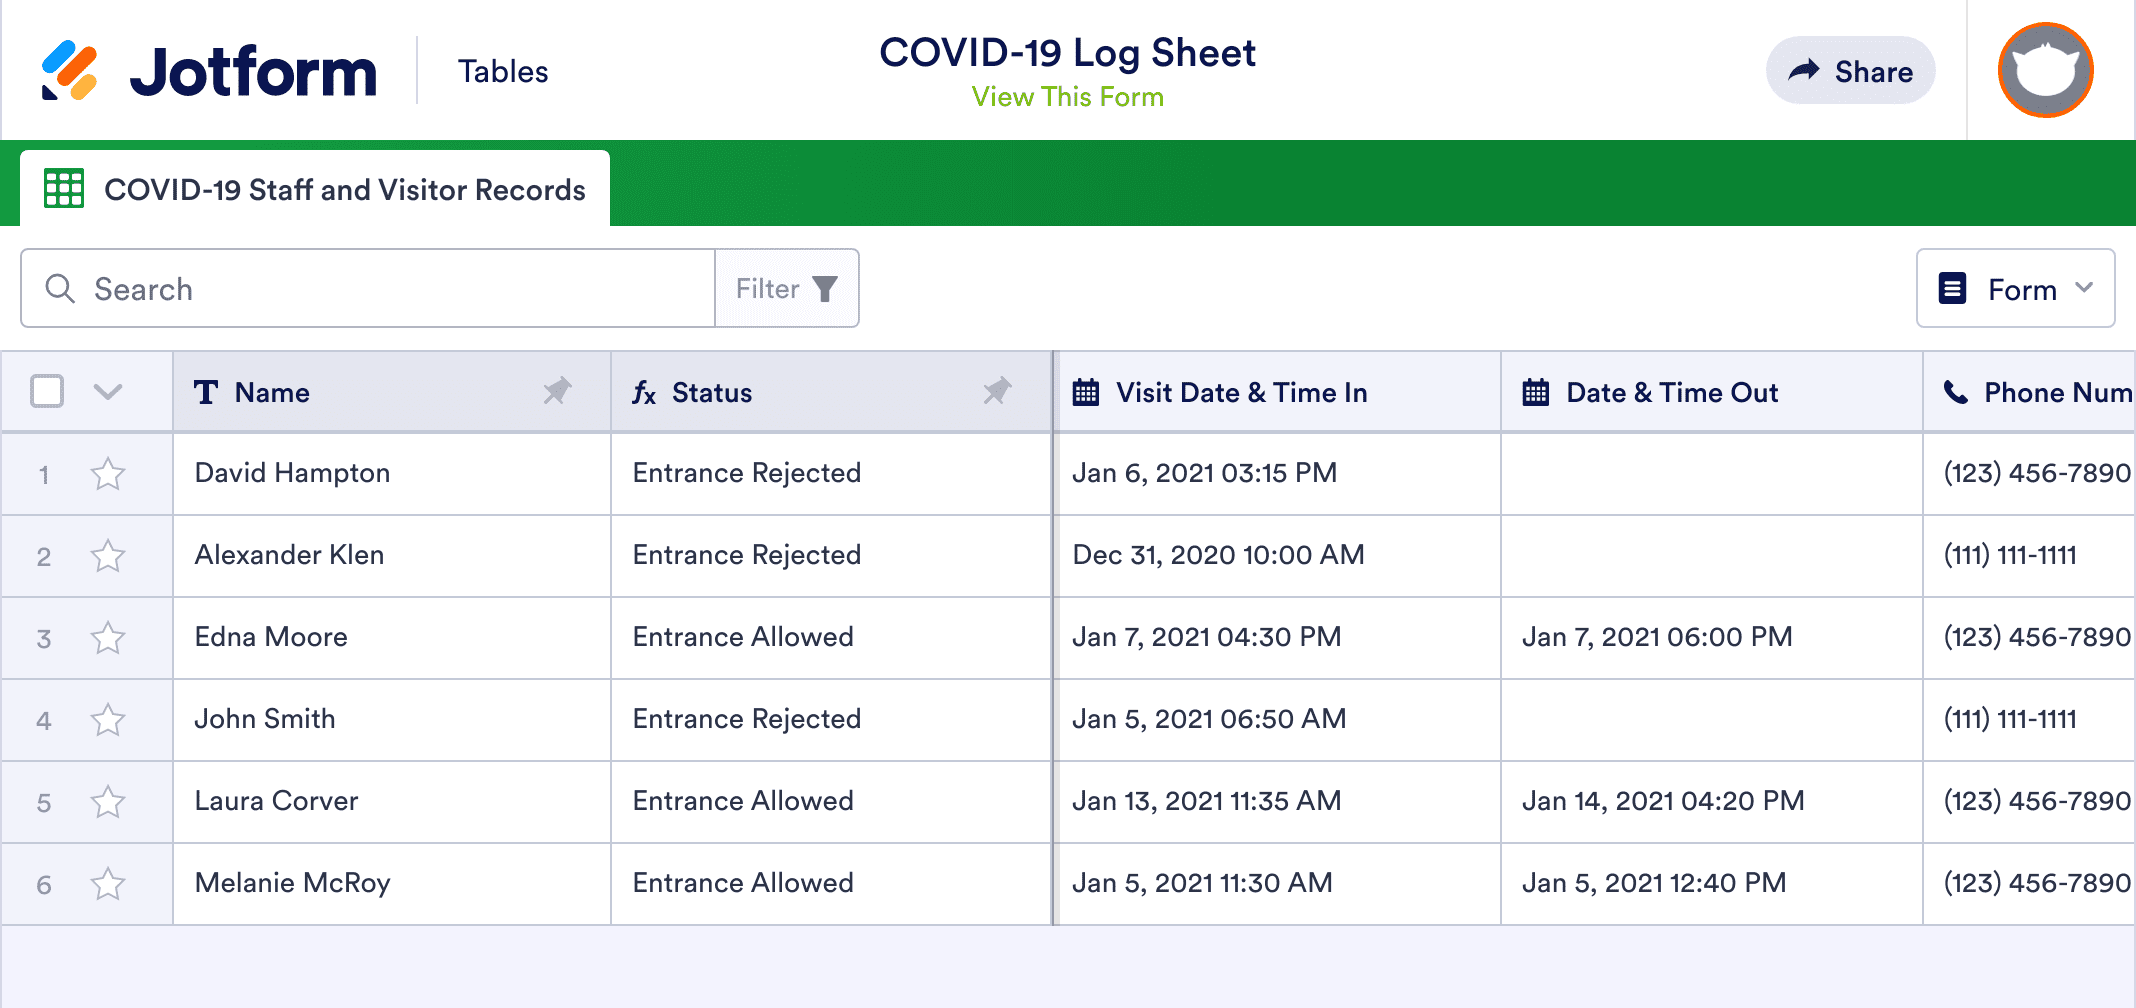 COVID-19 Log Sheet